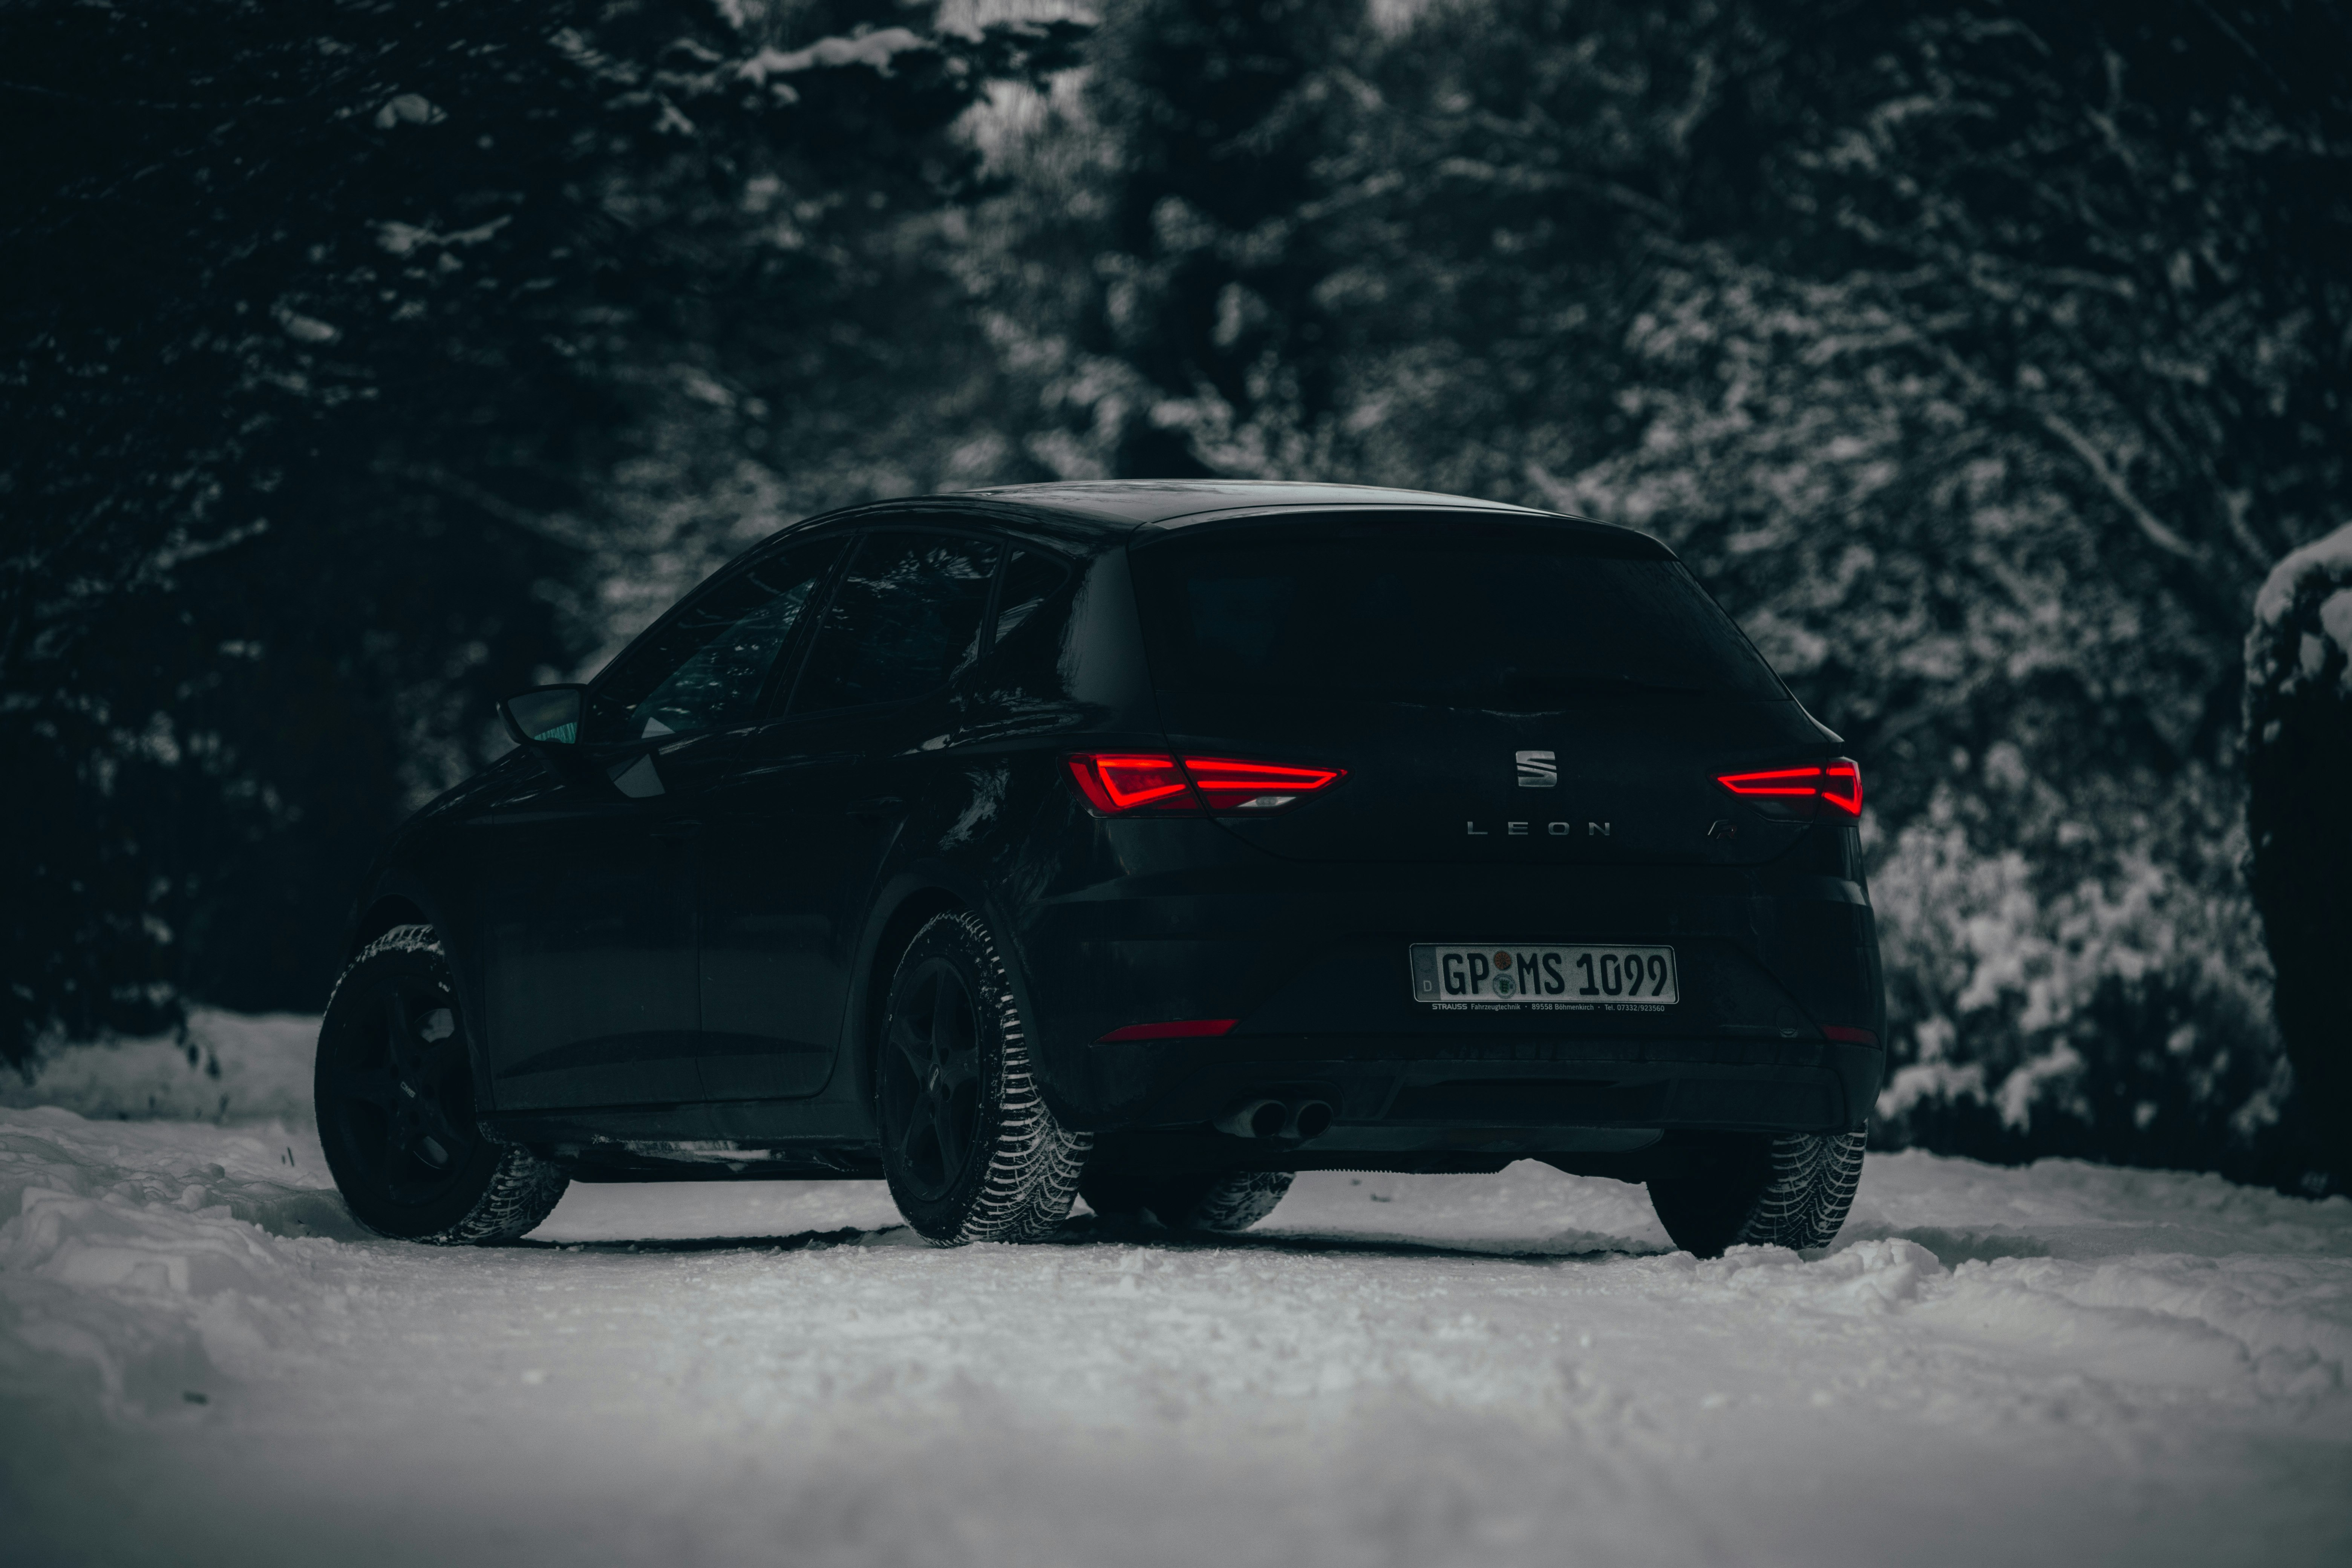 black car on snow covered ground